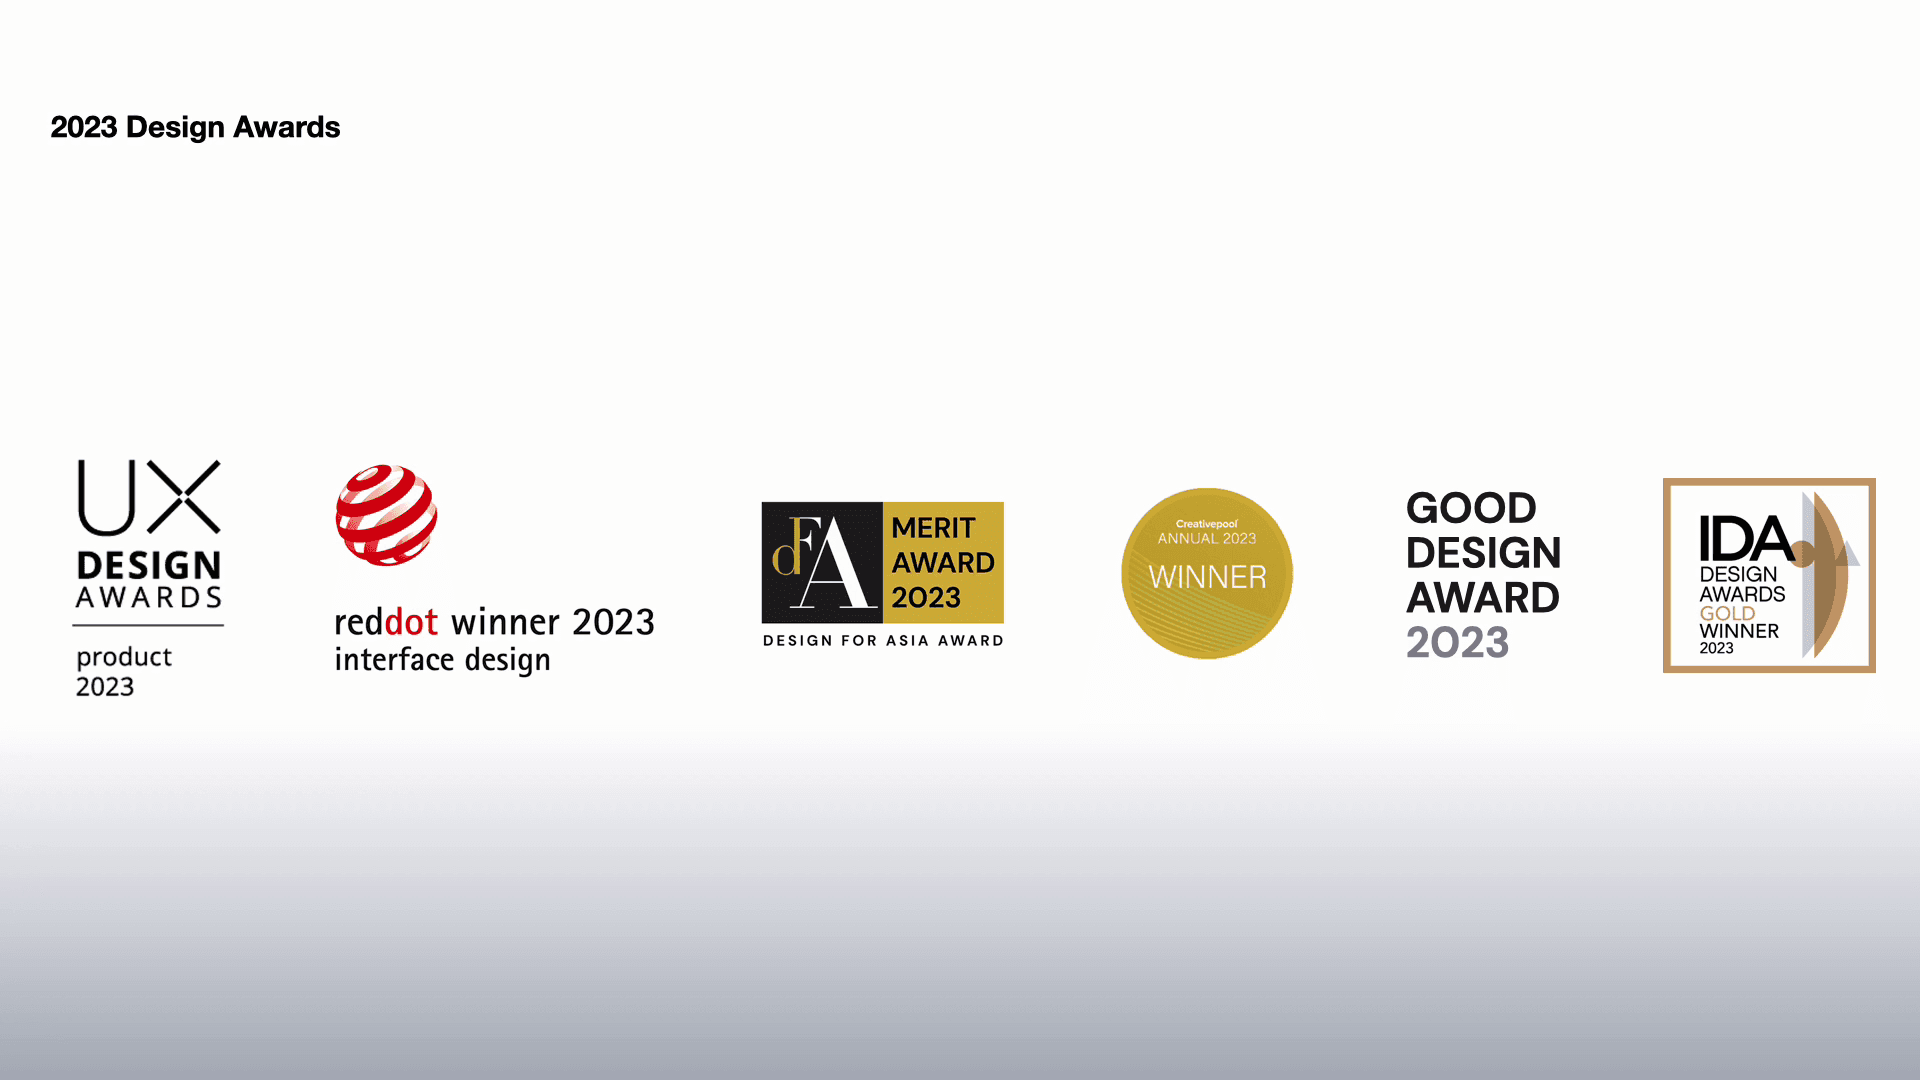 GoTyme Bank app wins Good Design International Award